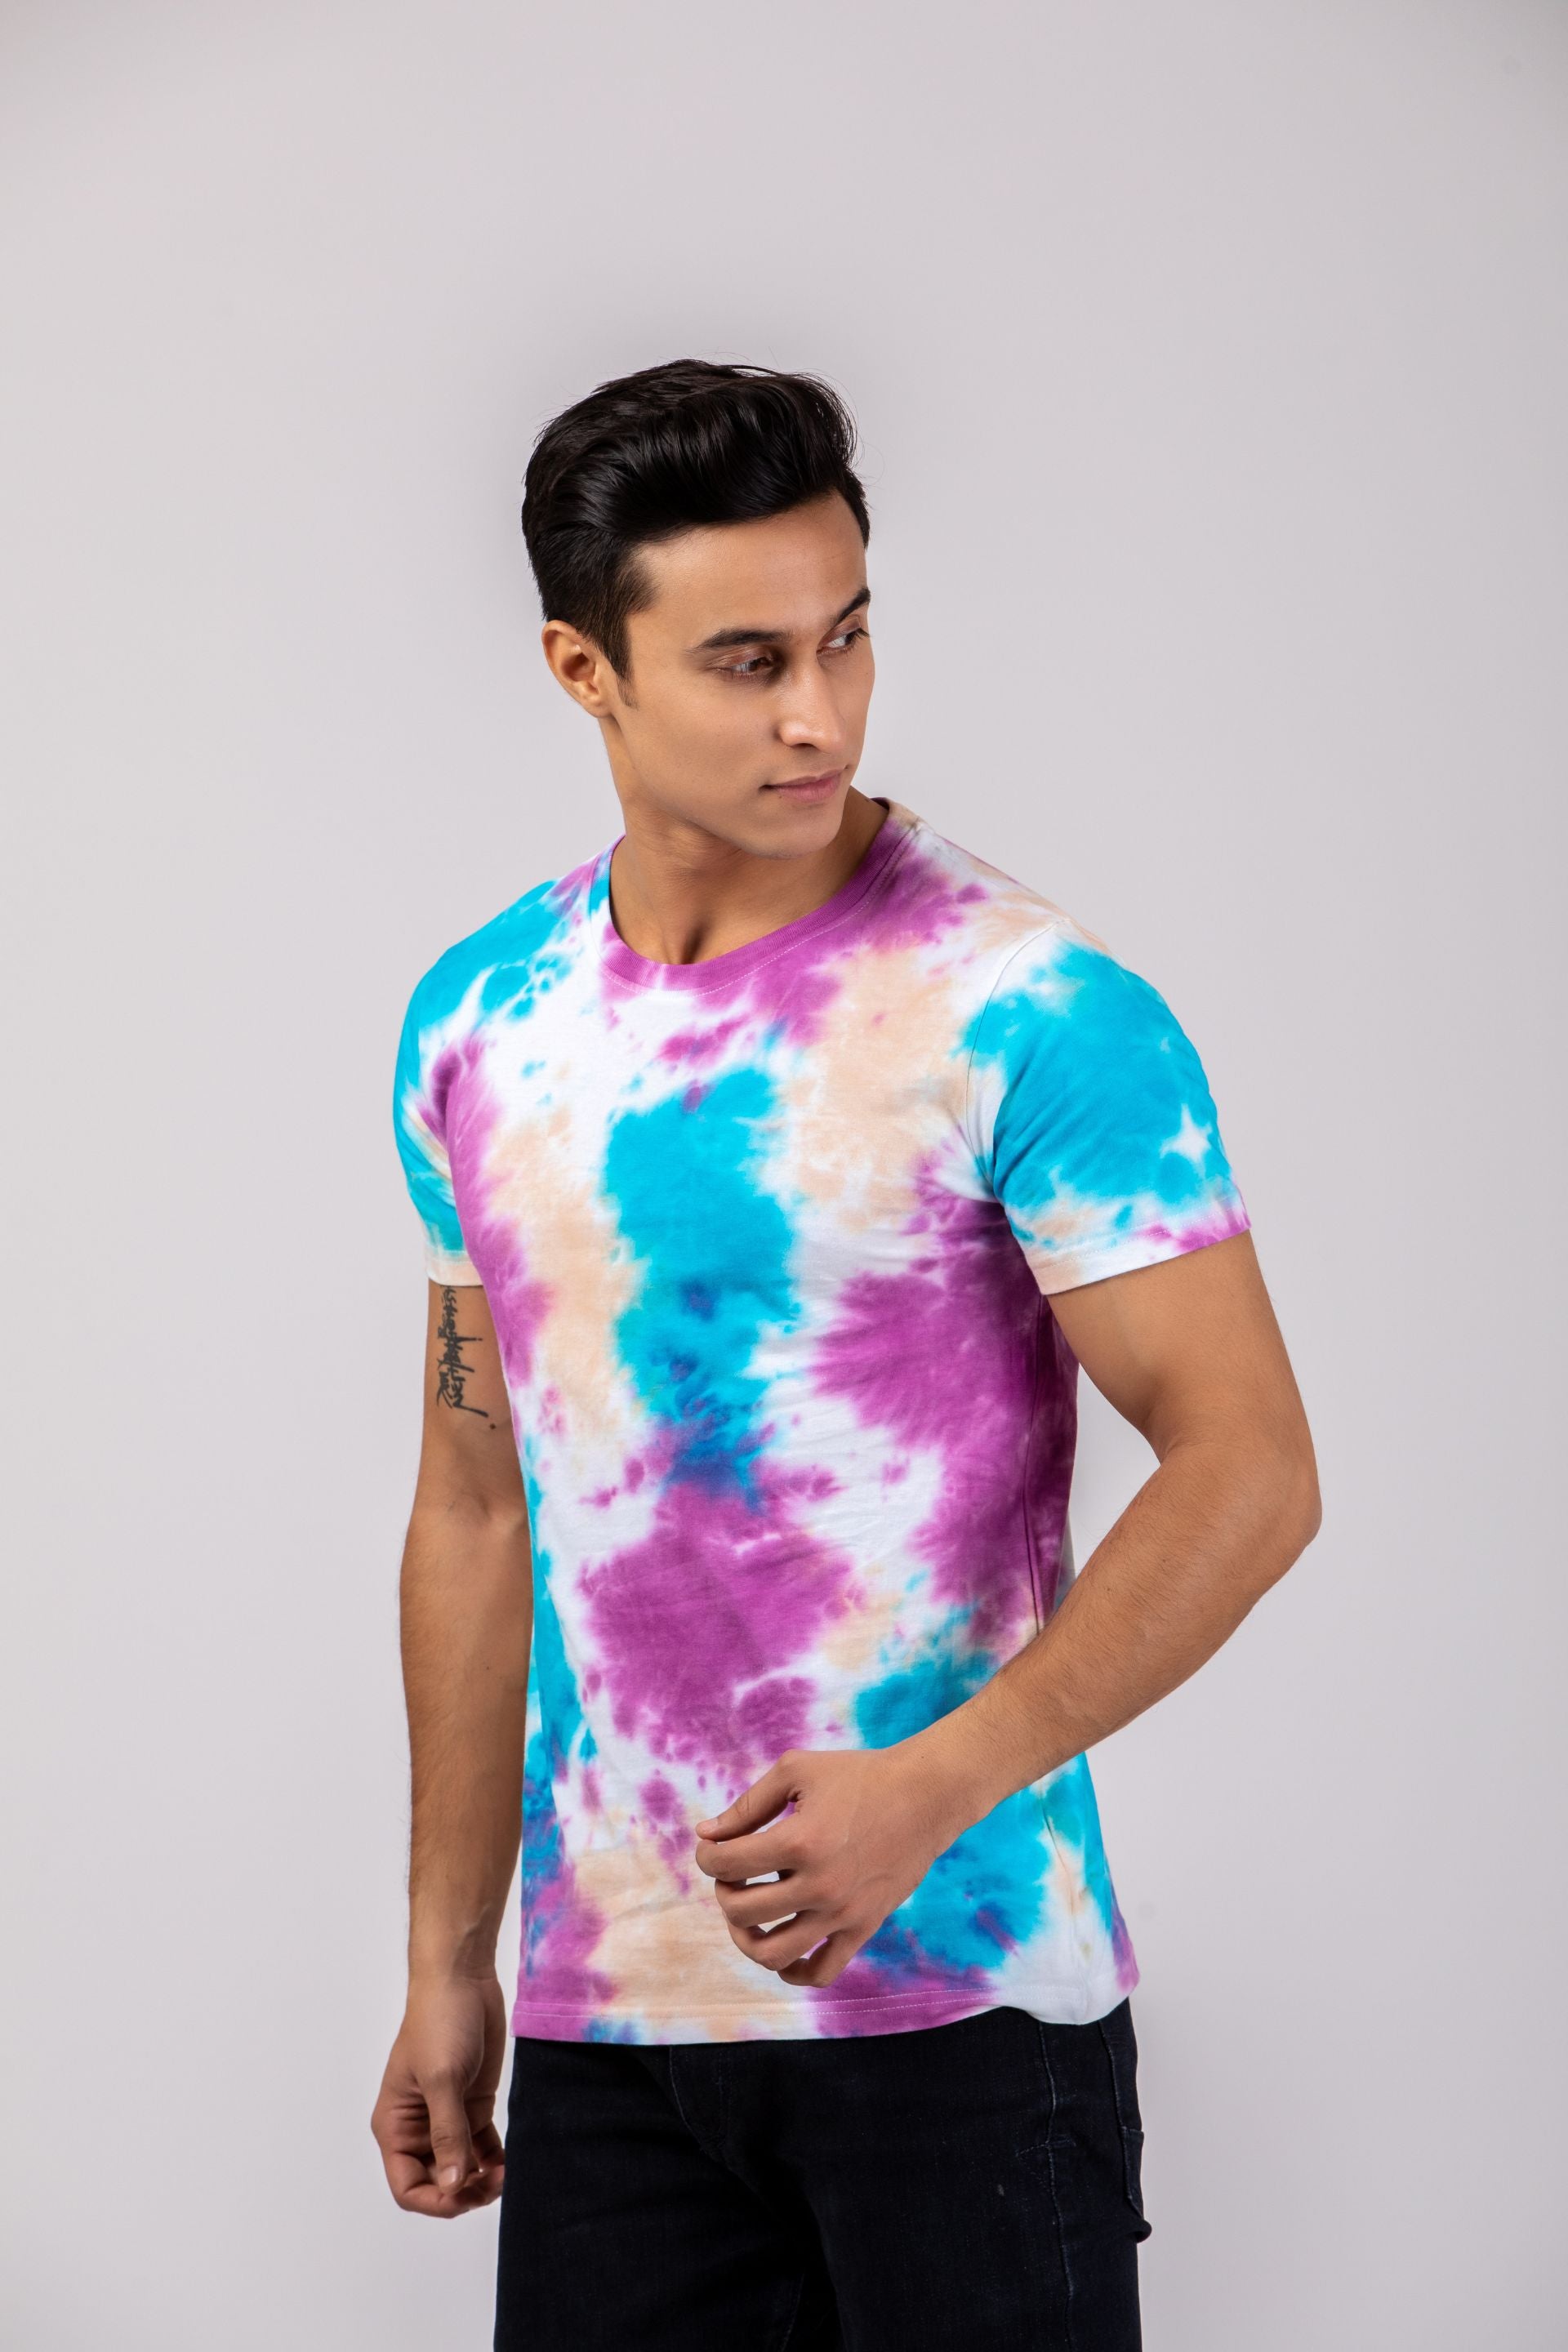 Firangi Yarn Handmade Cotton Tie-Dye Ombre Colored T-shirt